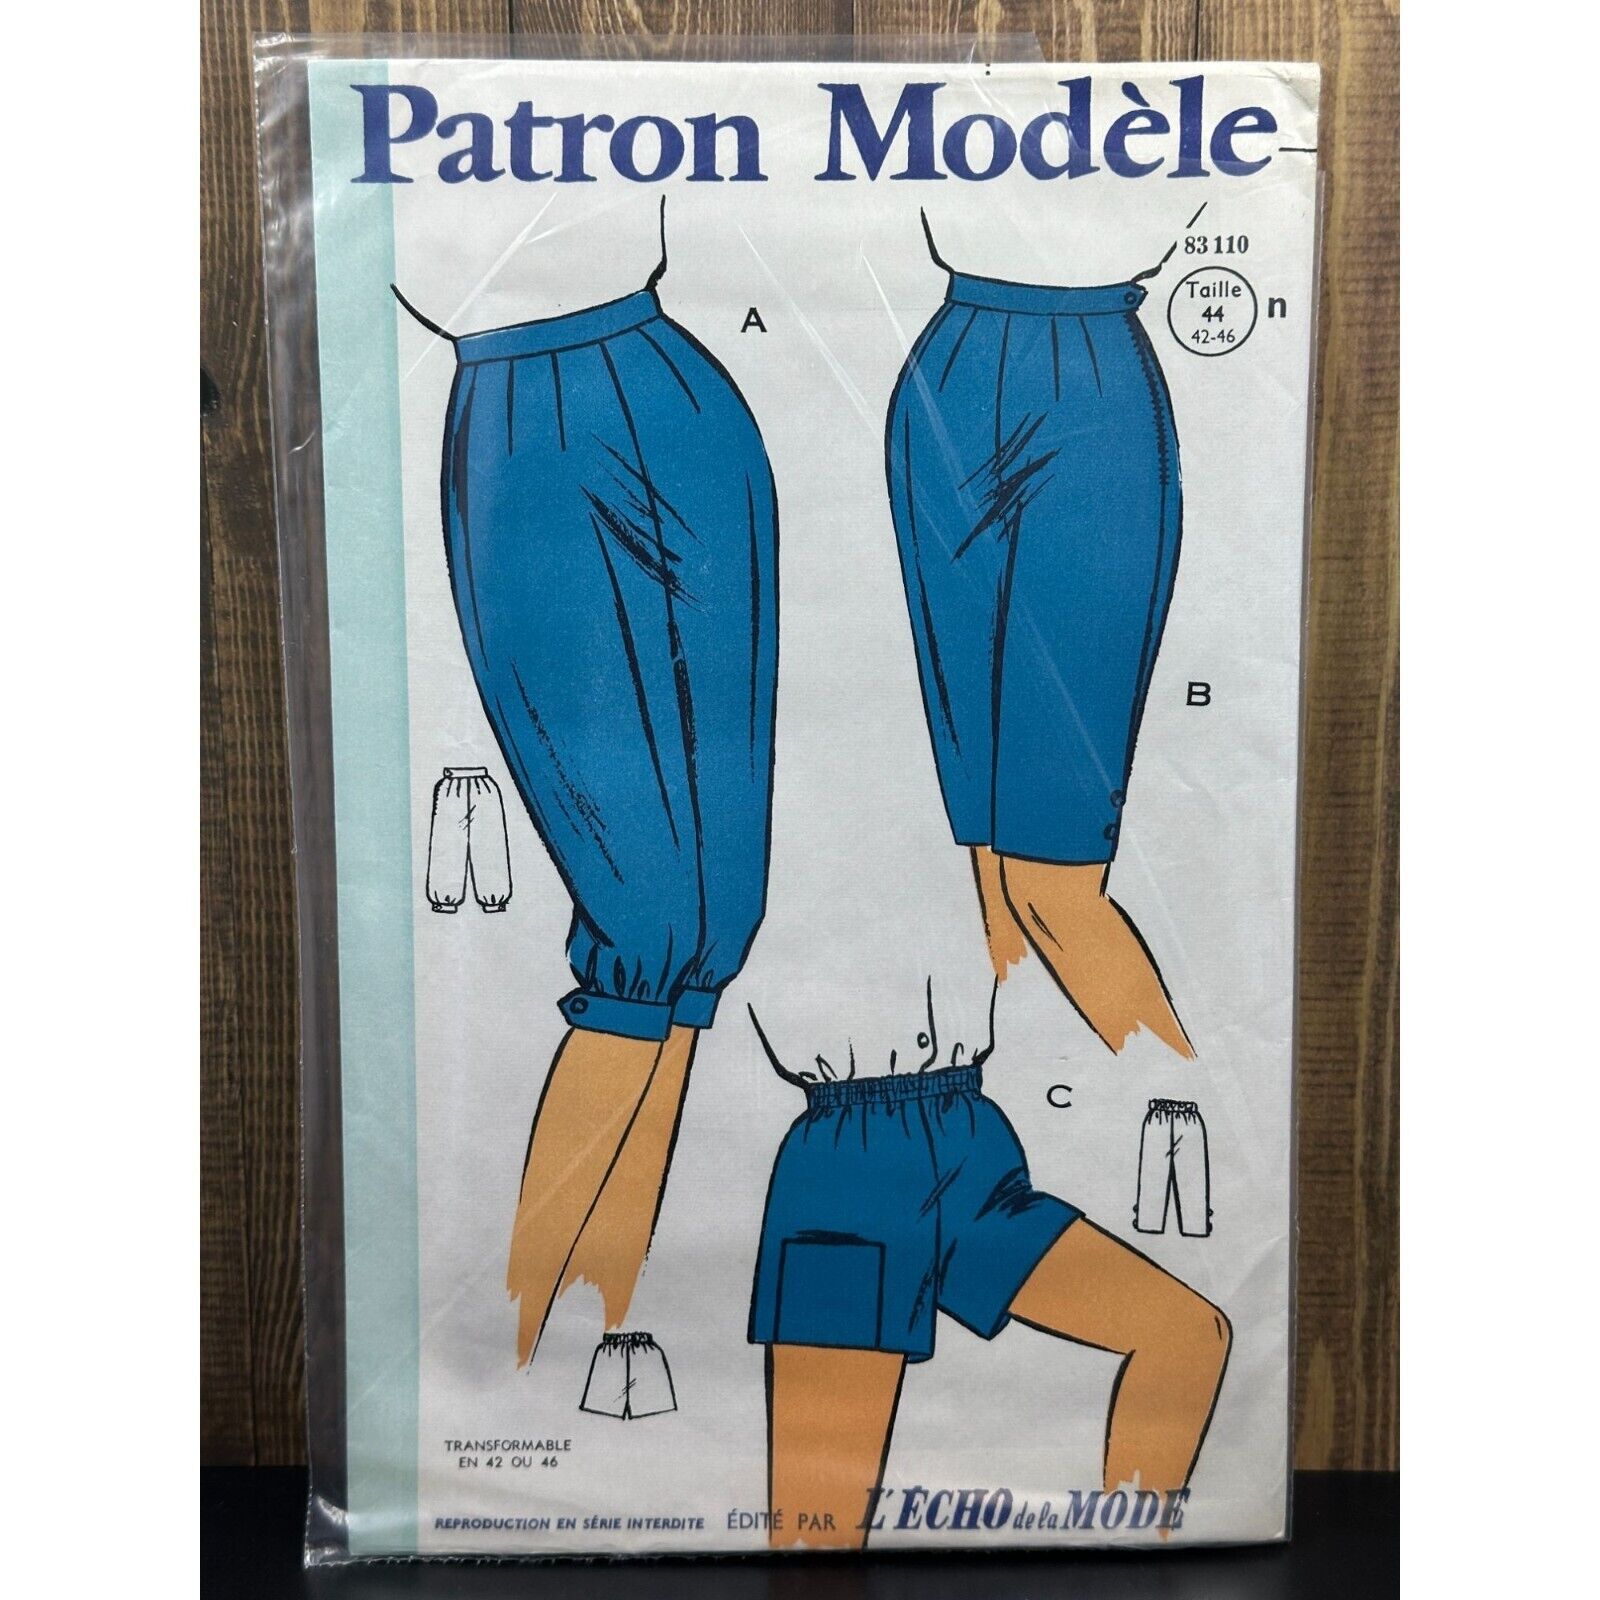 Vintage Patron Modele French Sewing Pattern 83 110 Sport Set